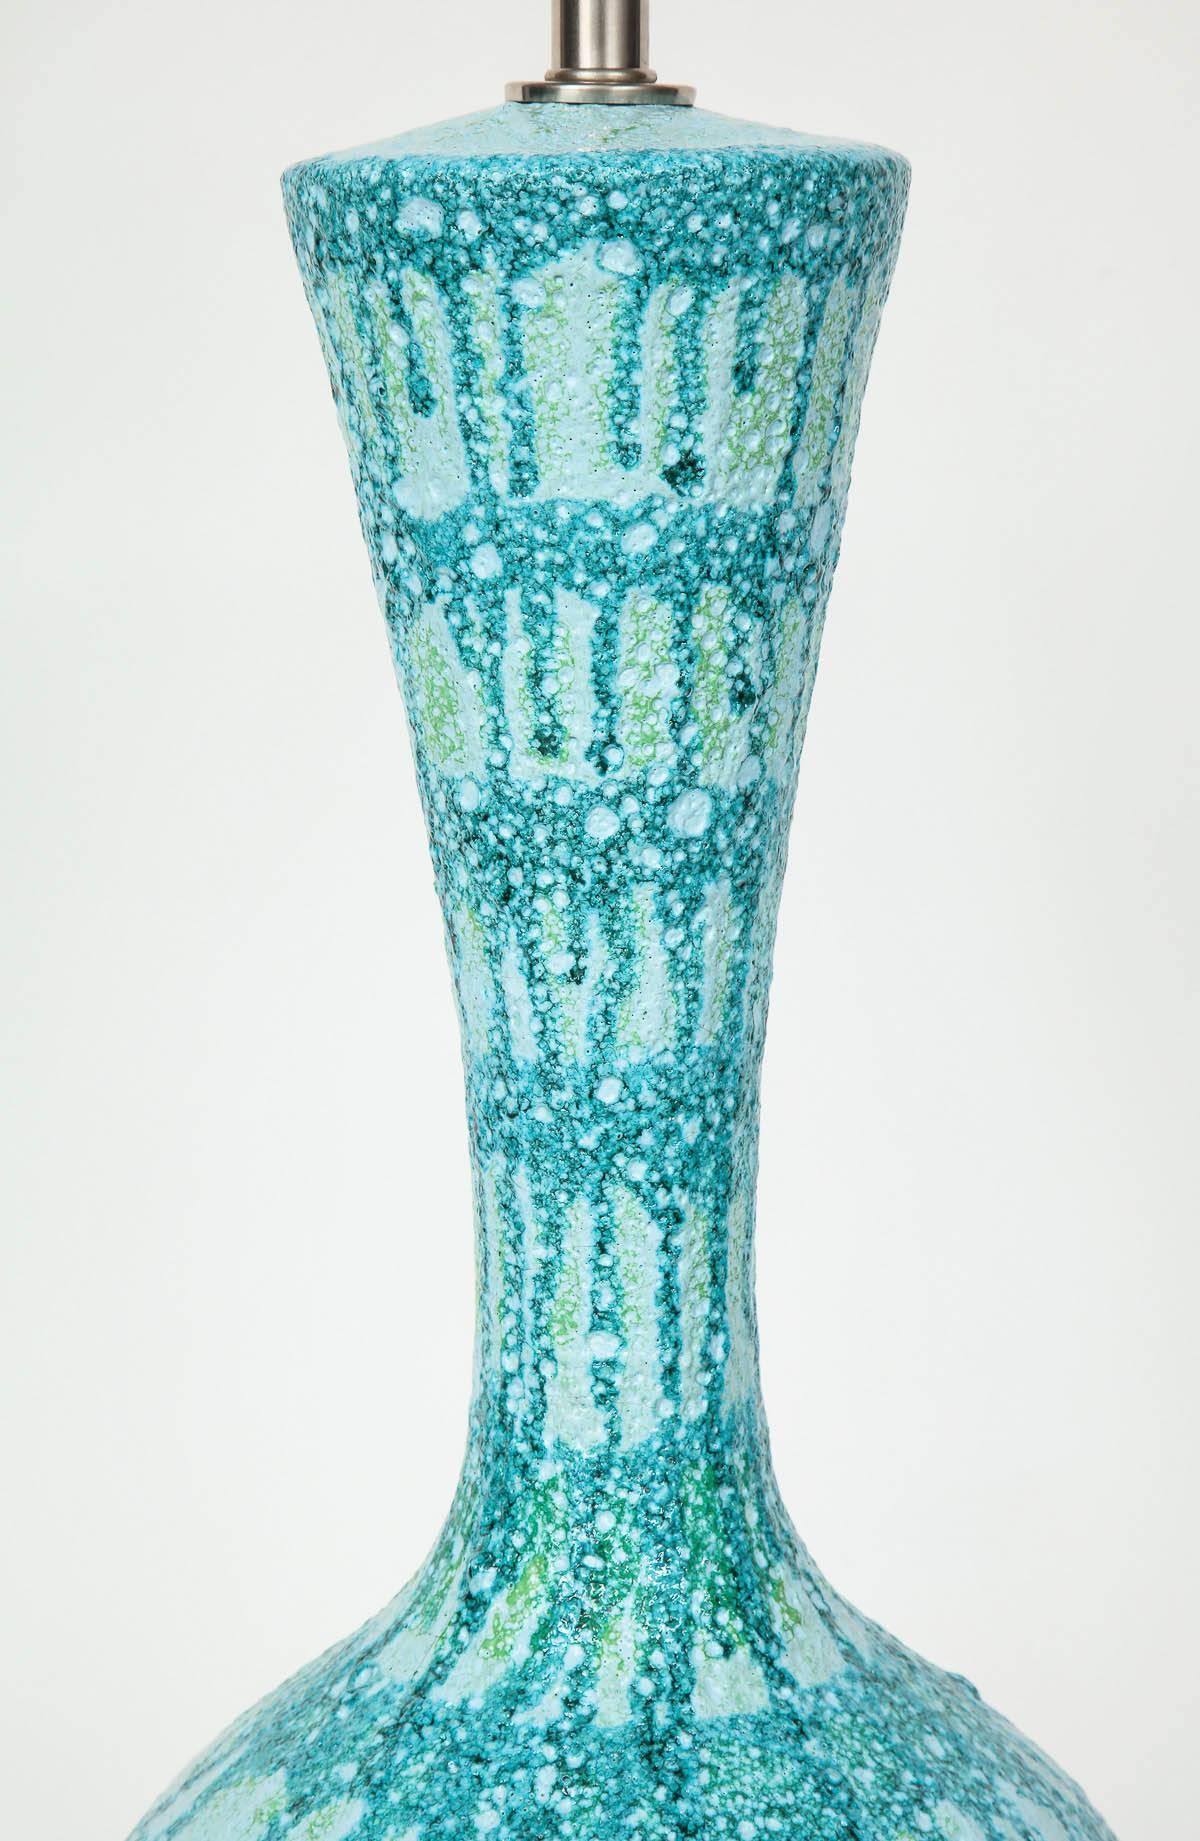 Mid-Century Modern Italian Blue Drip Glazed Ceramic Lamps